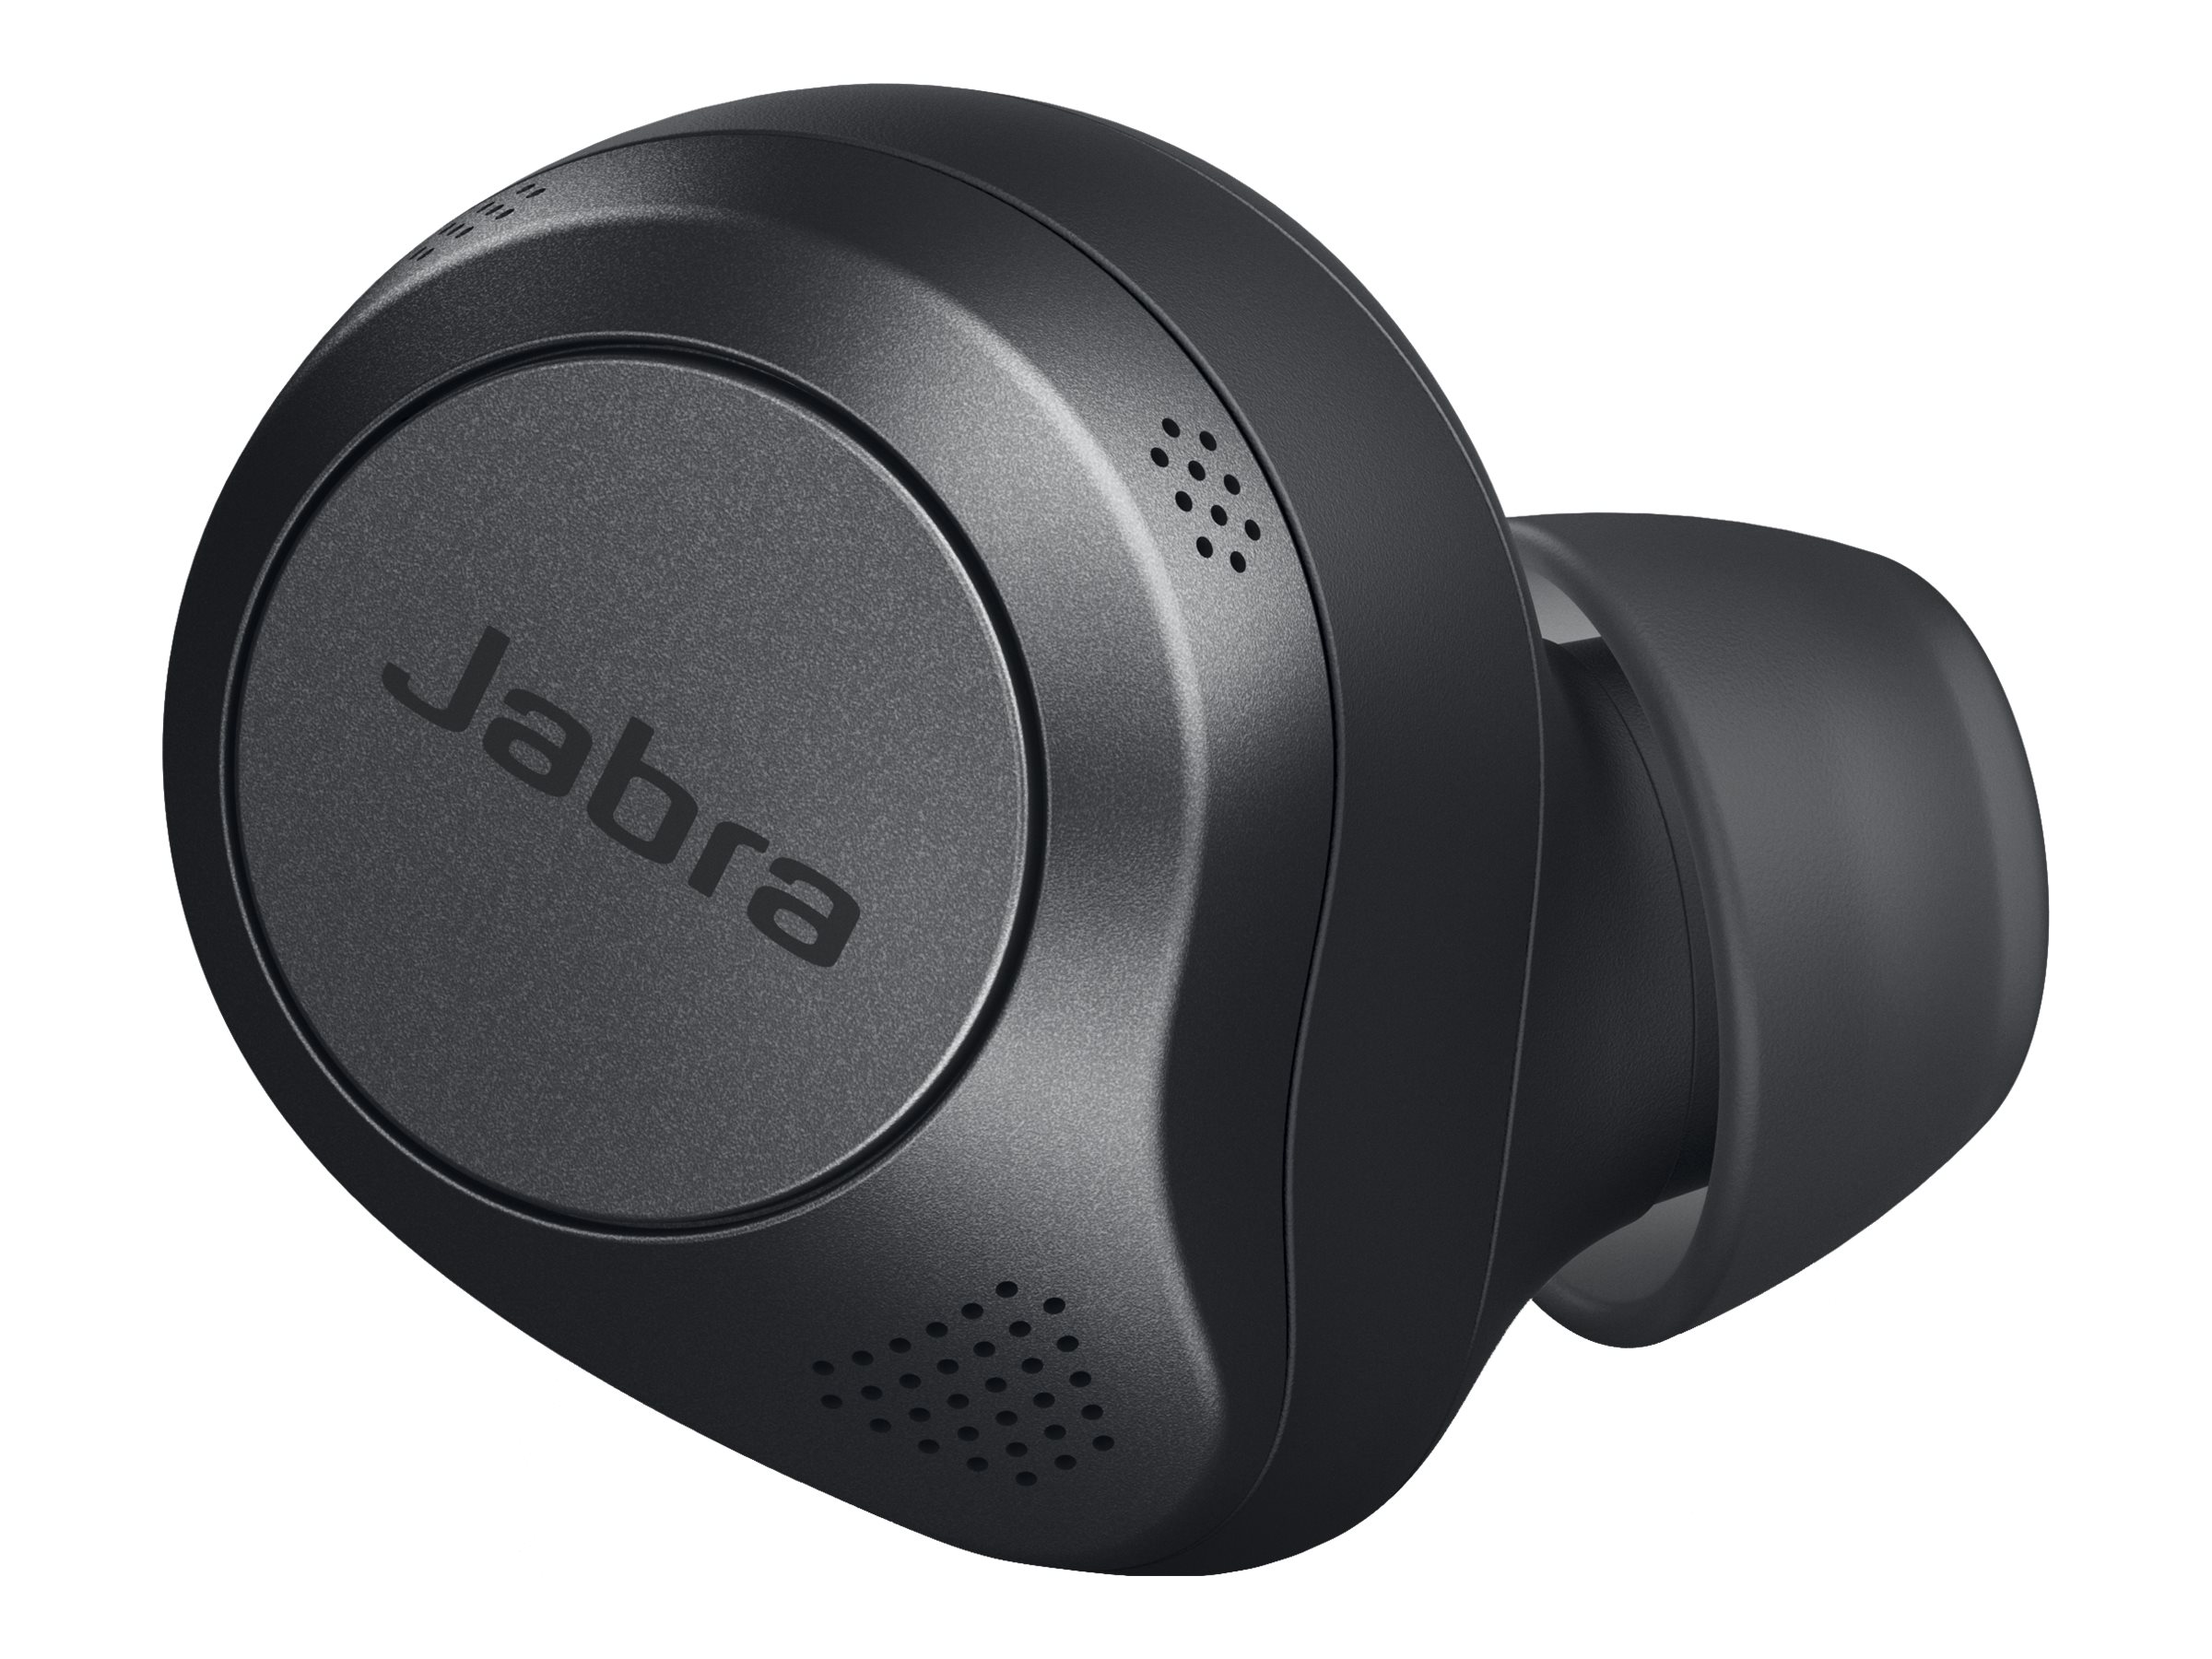 Jabra Elite 3 True Wireless Earbuds, Noise Cancelling, Dark Grey